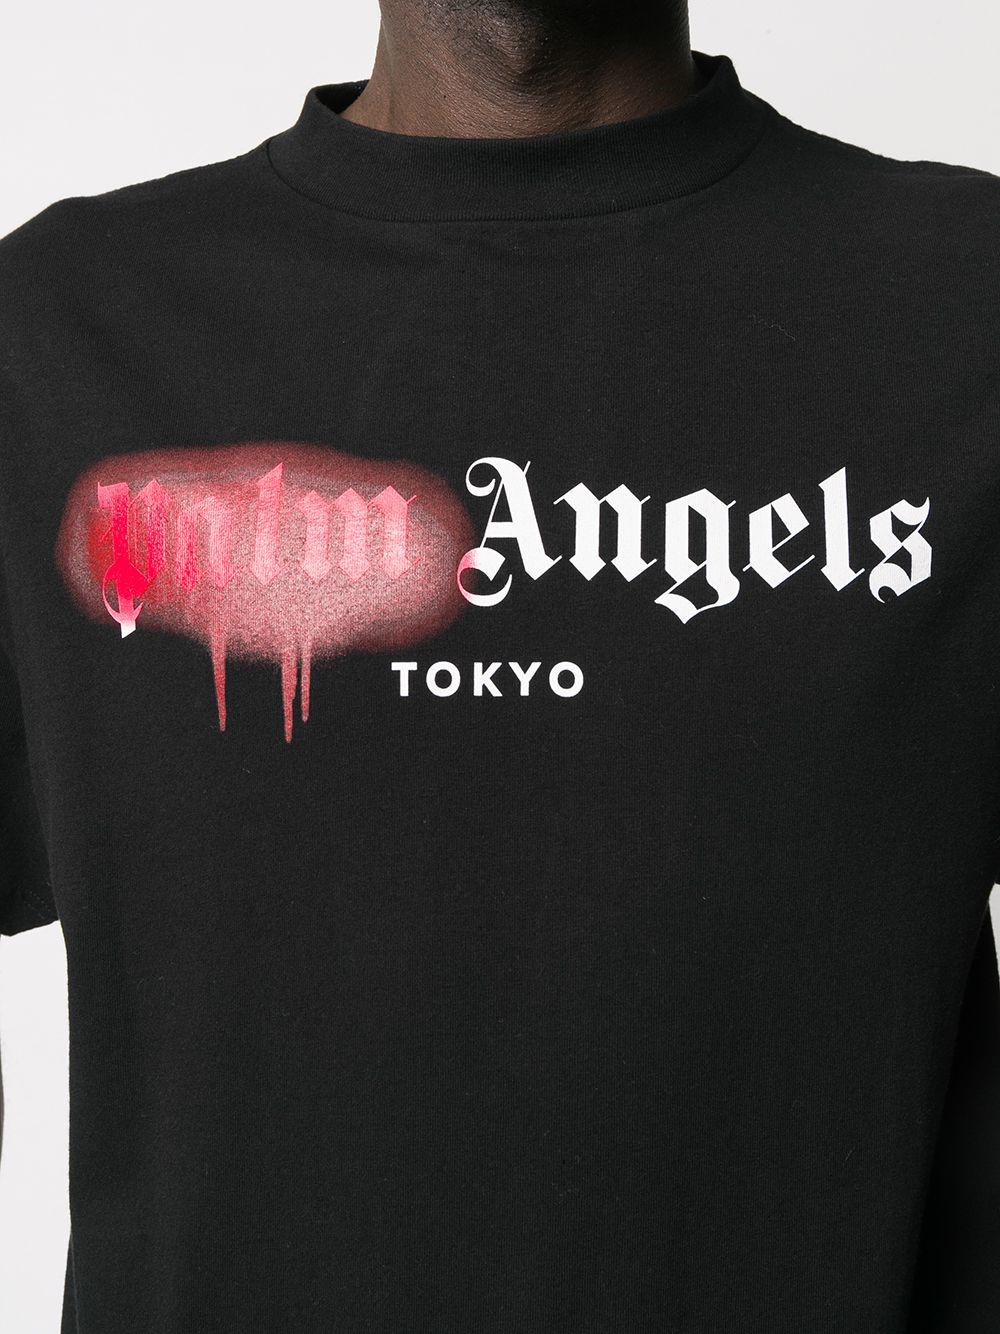 t shirt palm angels tokyo